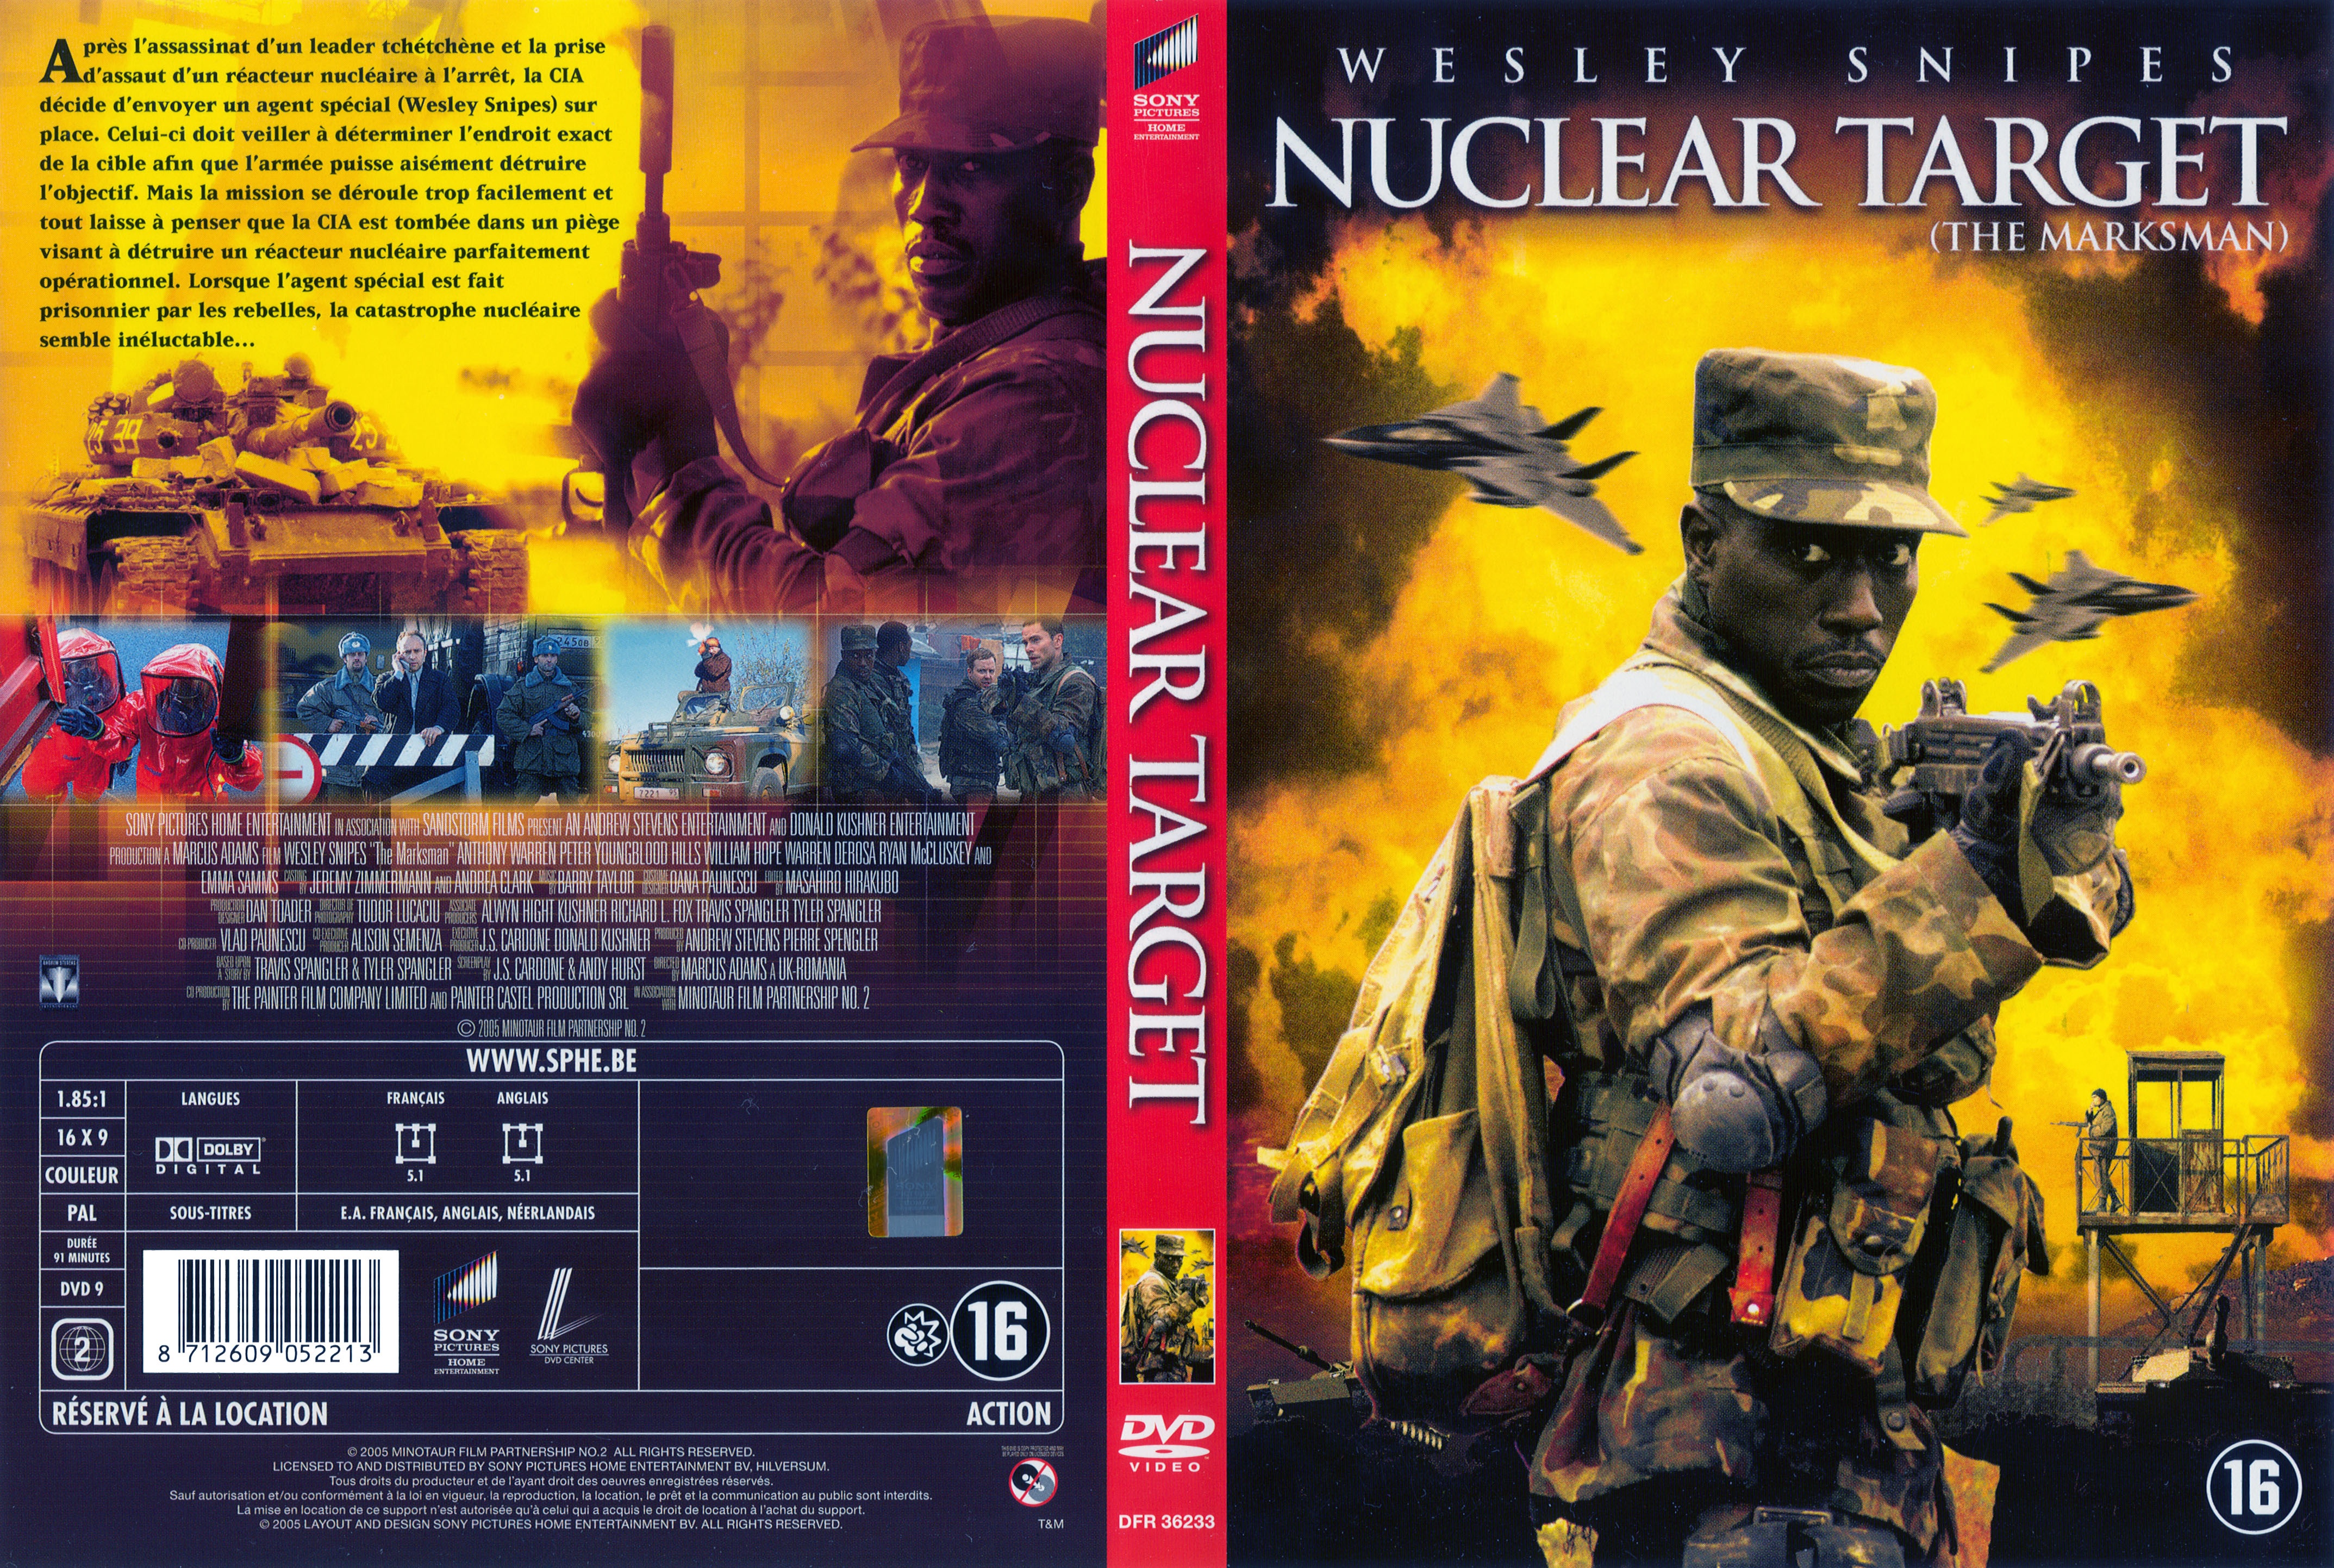 Jaquette DVD Nuclear target v3